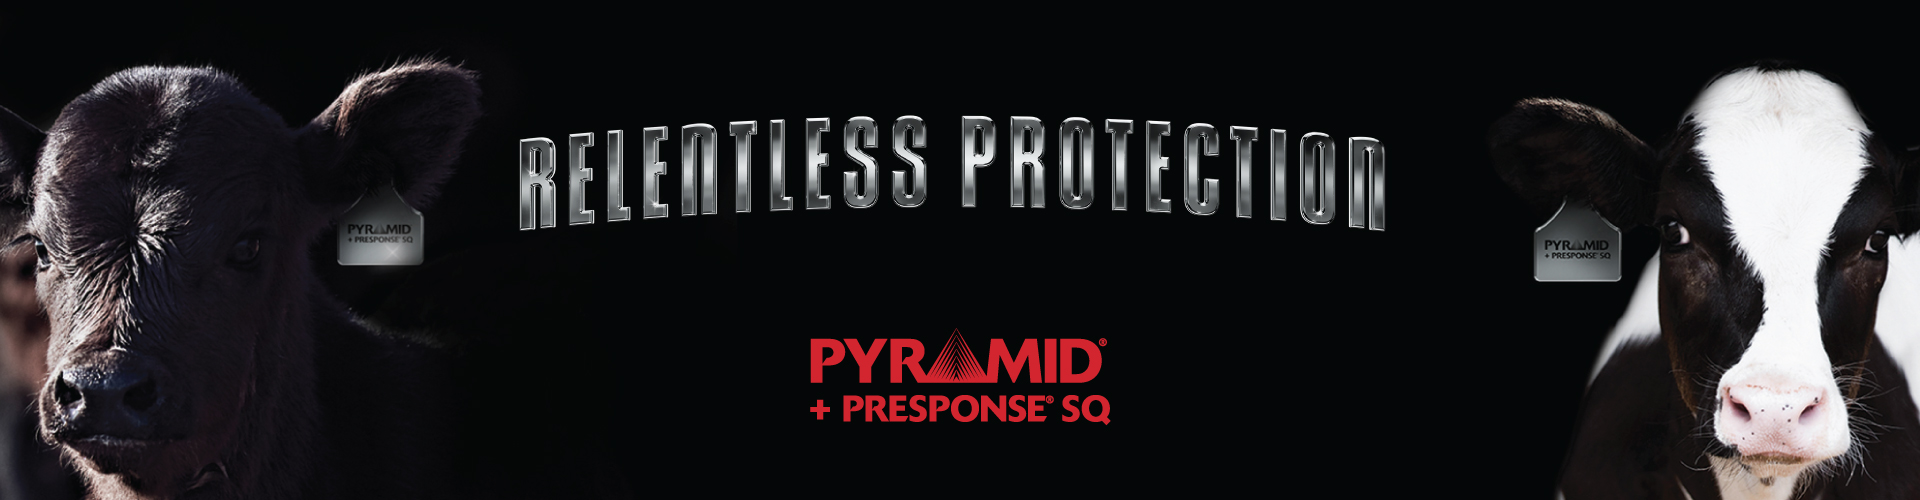 Relentless Protection Pyramid + Presponse SQ